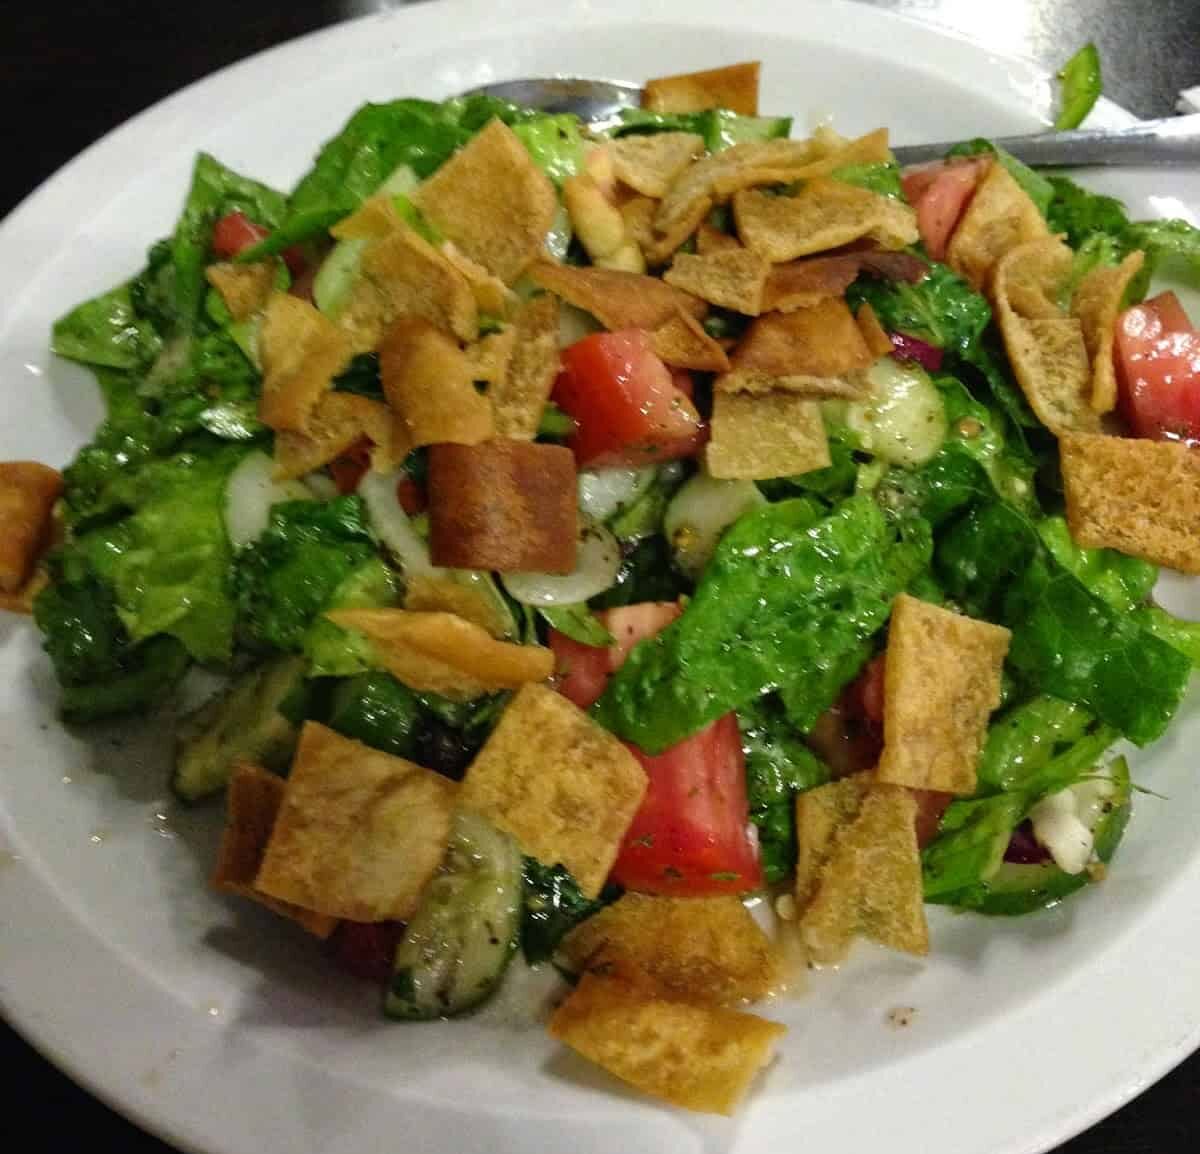 Fattoush salad at Grand Café in Colón, Panama